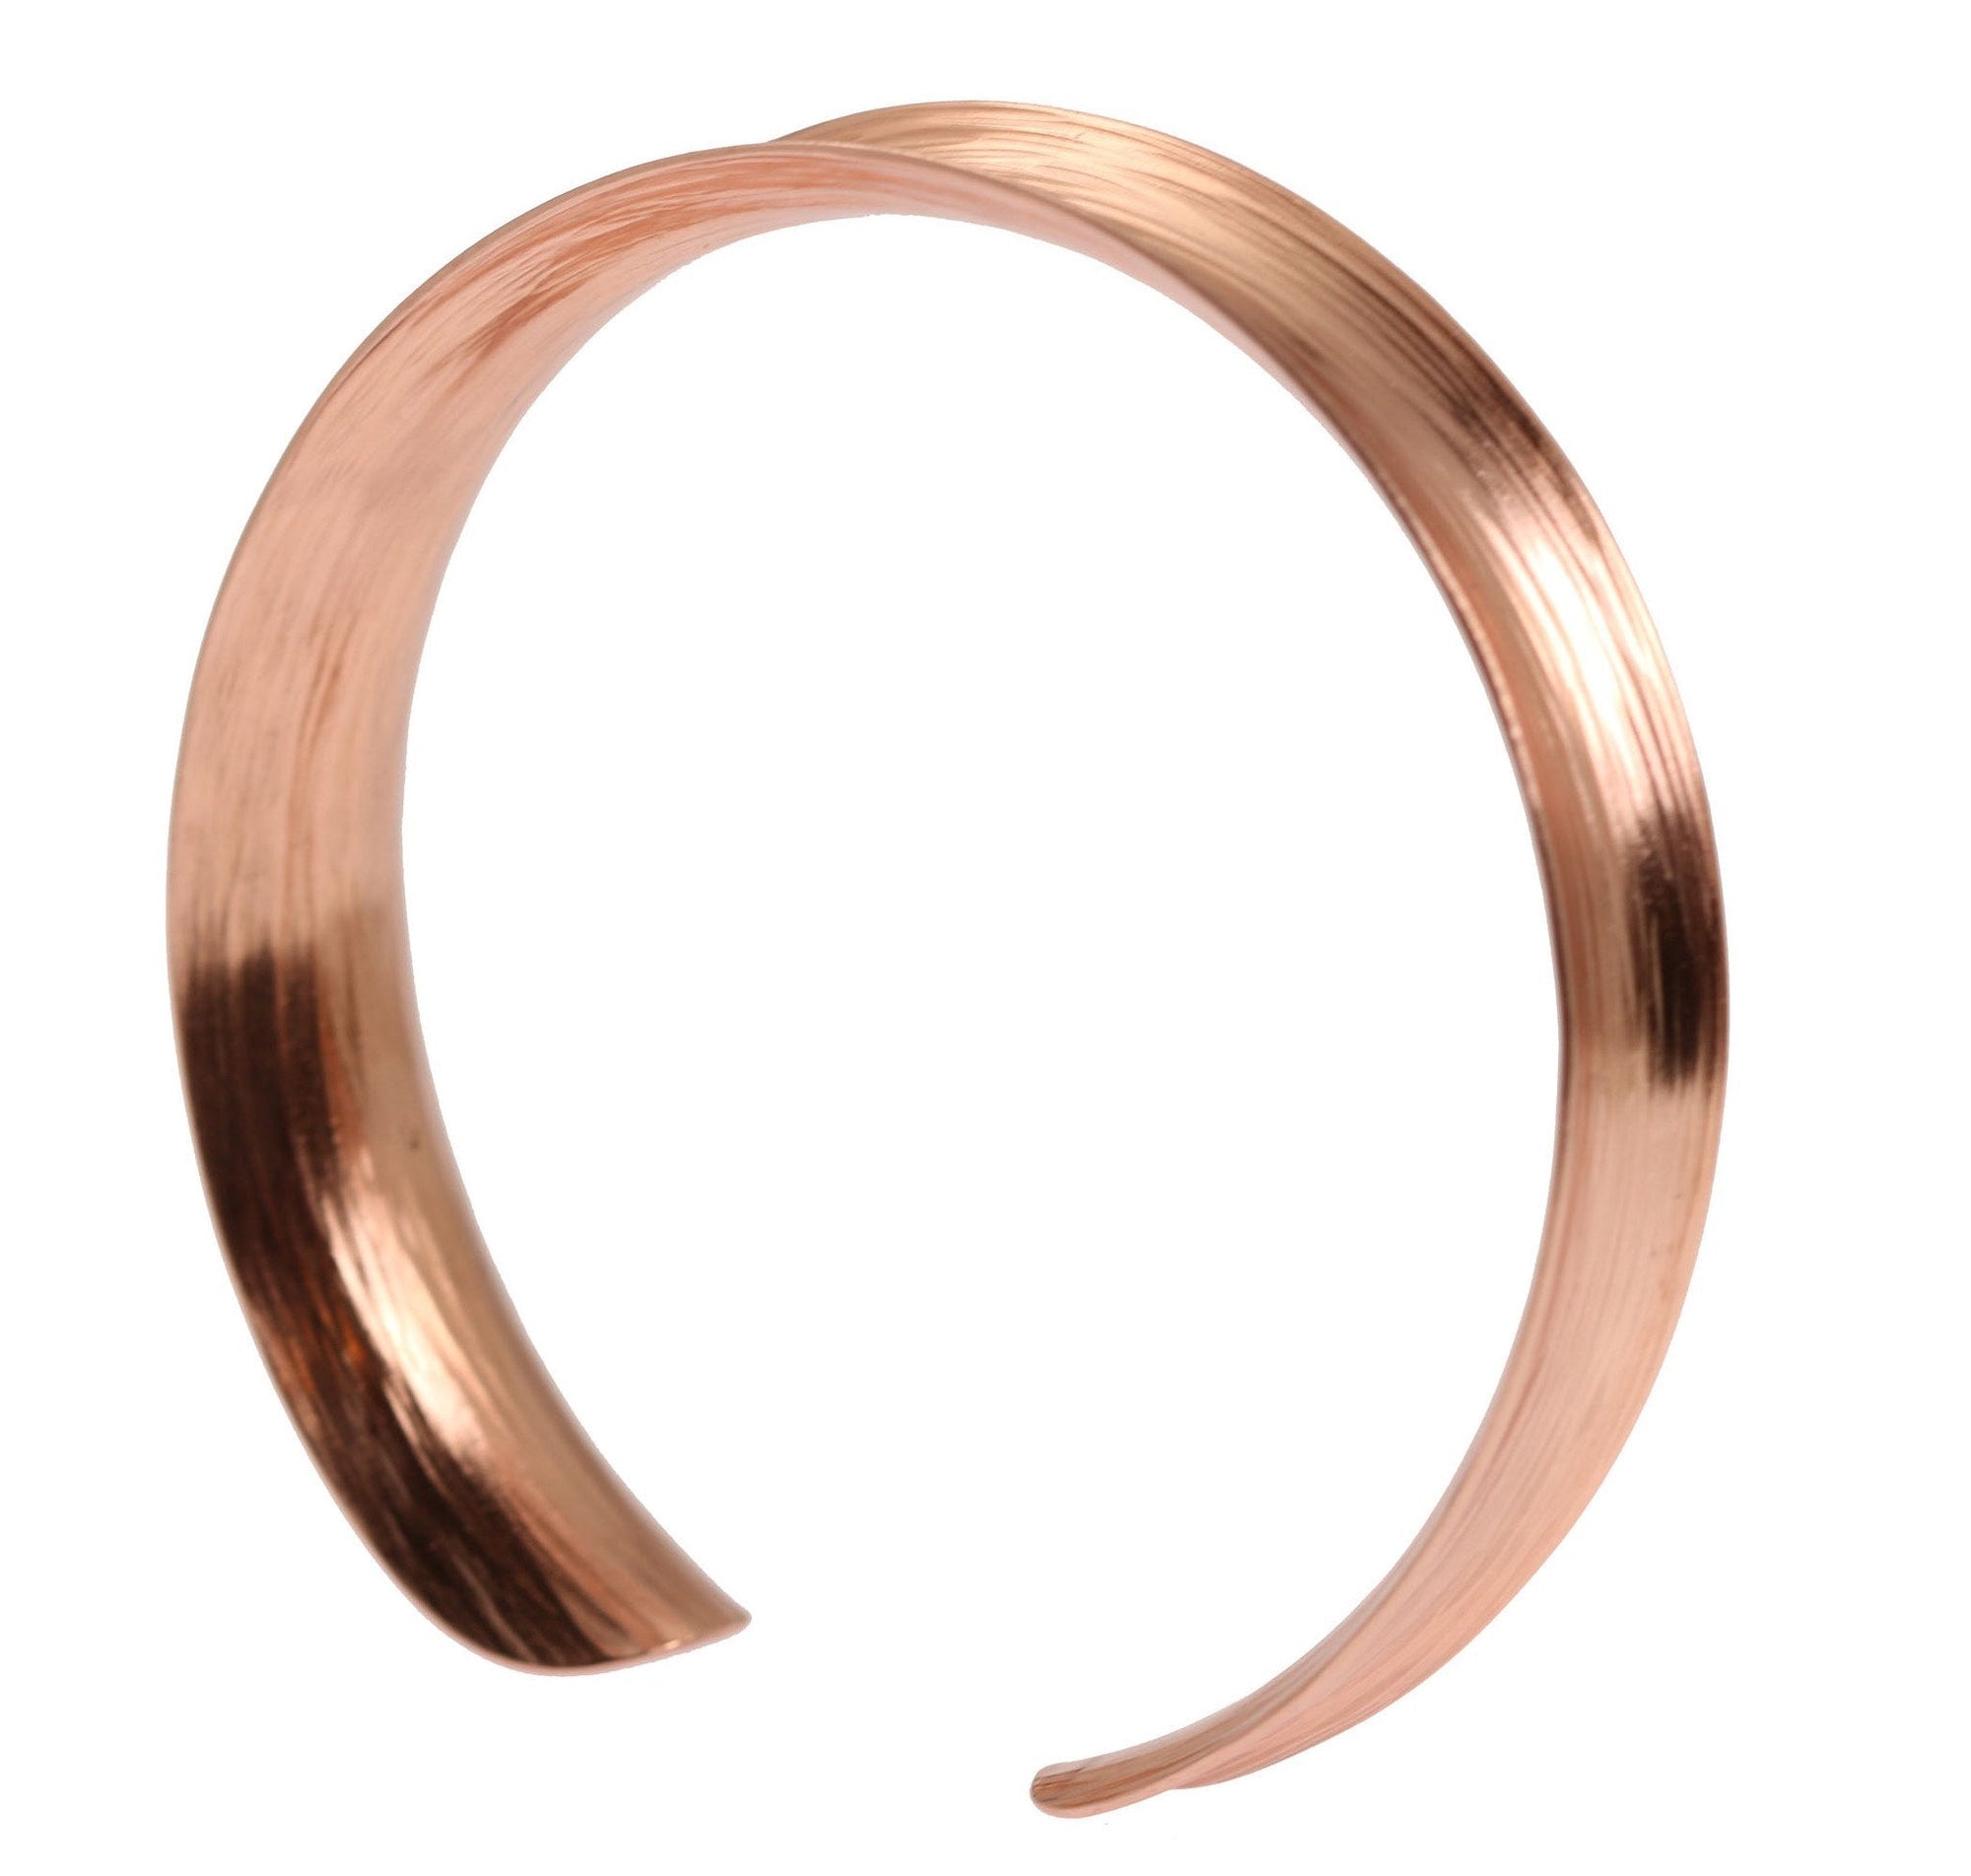 Detailed View of Anticlastic Bark Copper Bangle Bracelet